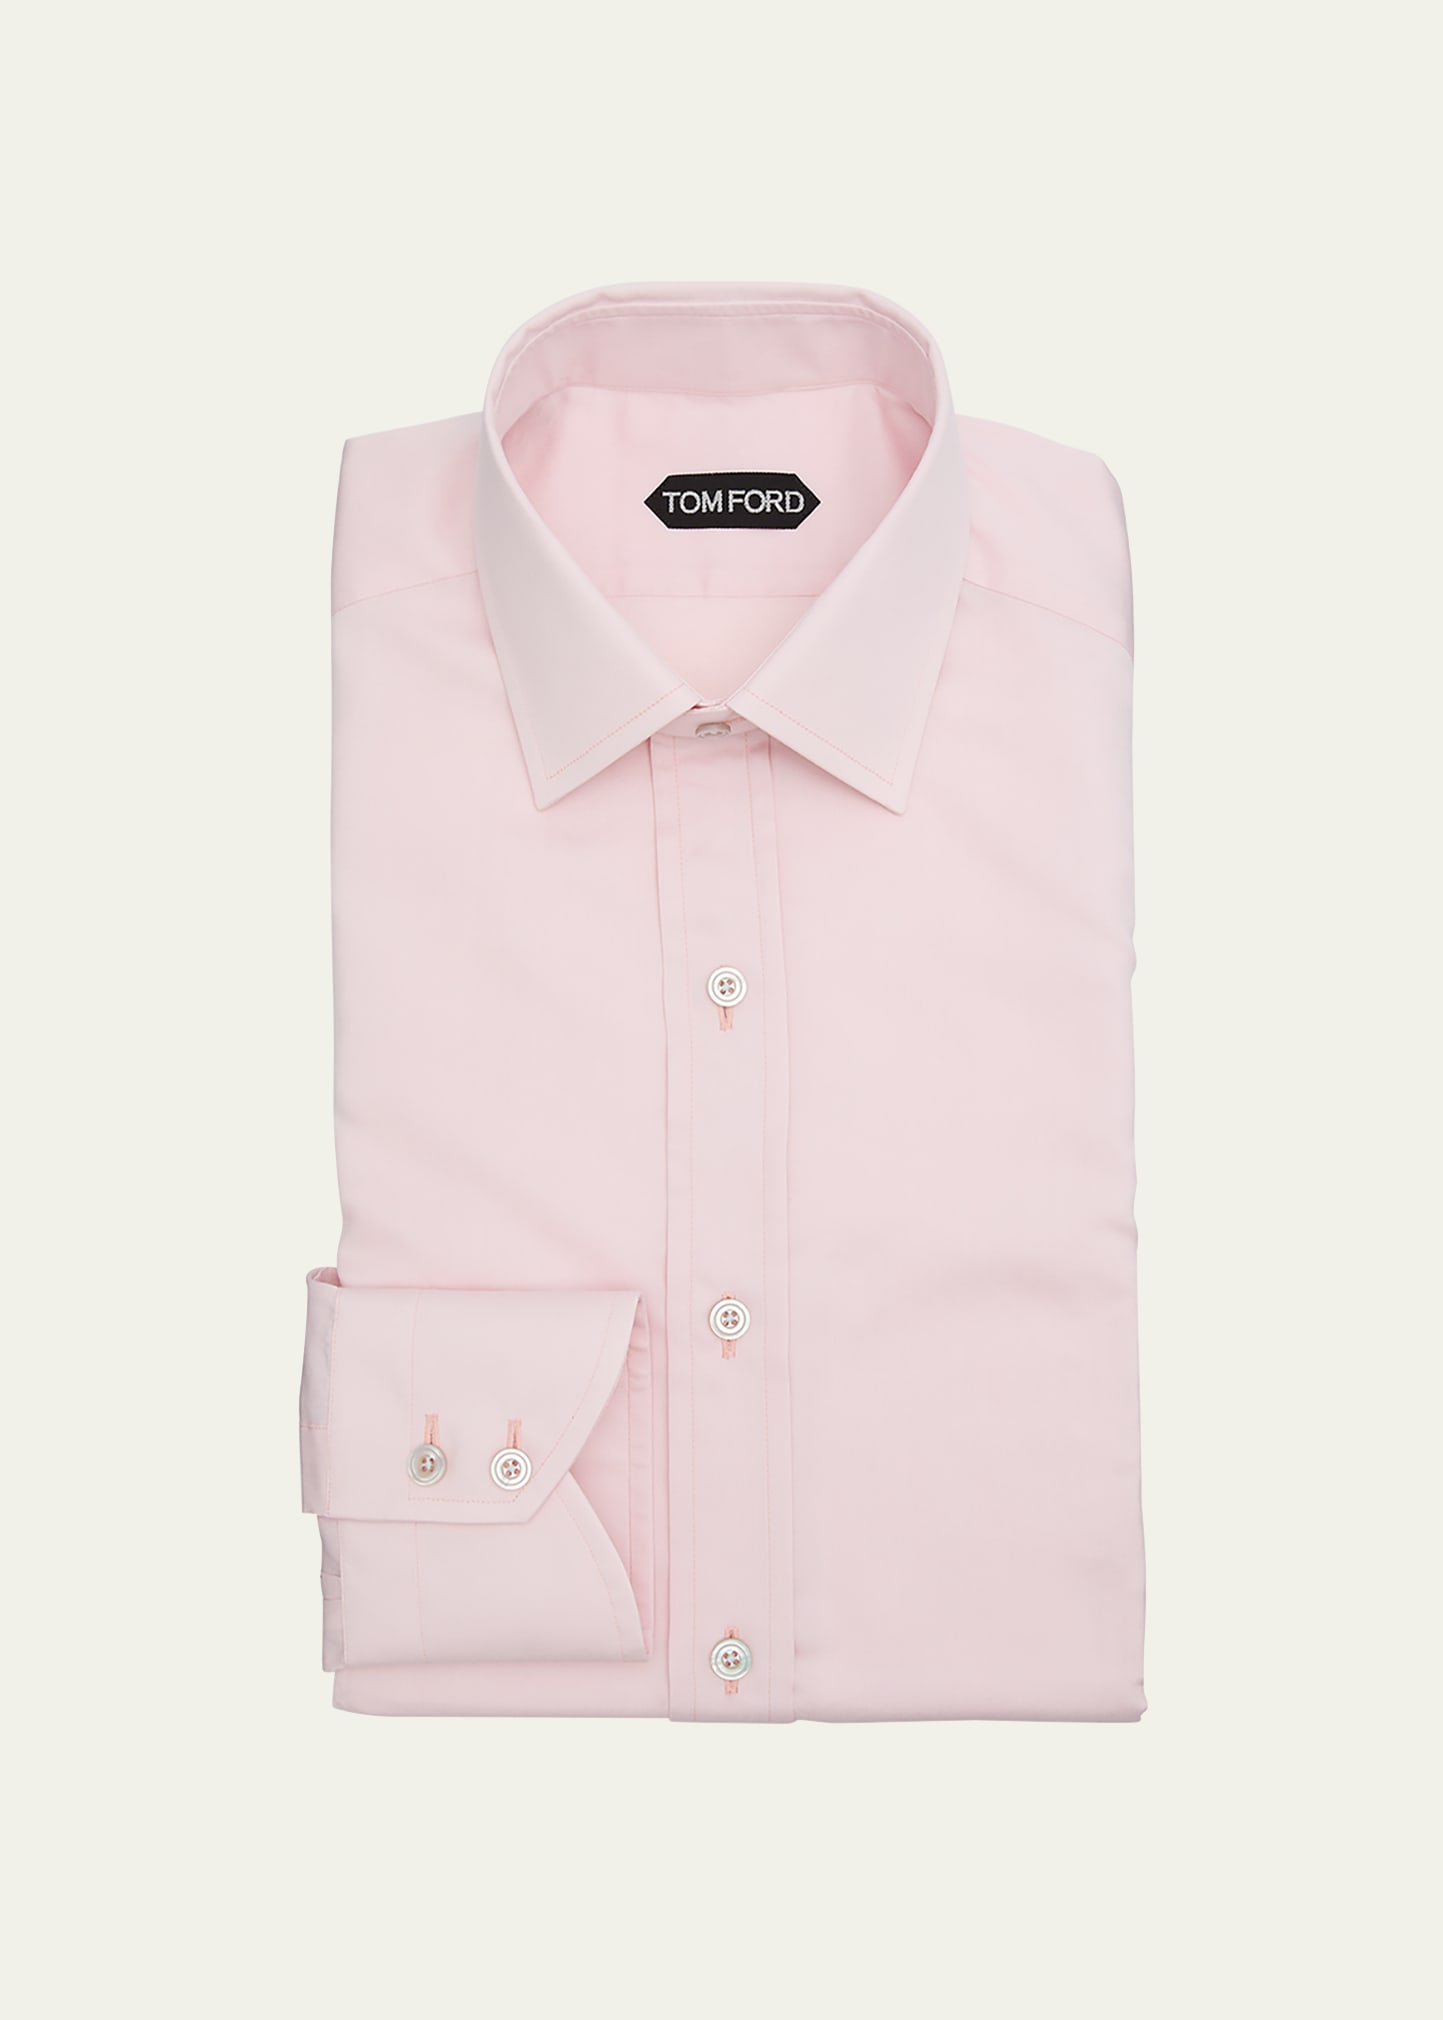 Tom Ford Slm Smll Cllr Pwdr Pink Co Silk Shirt